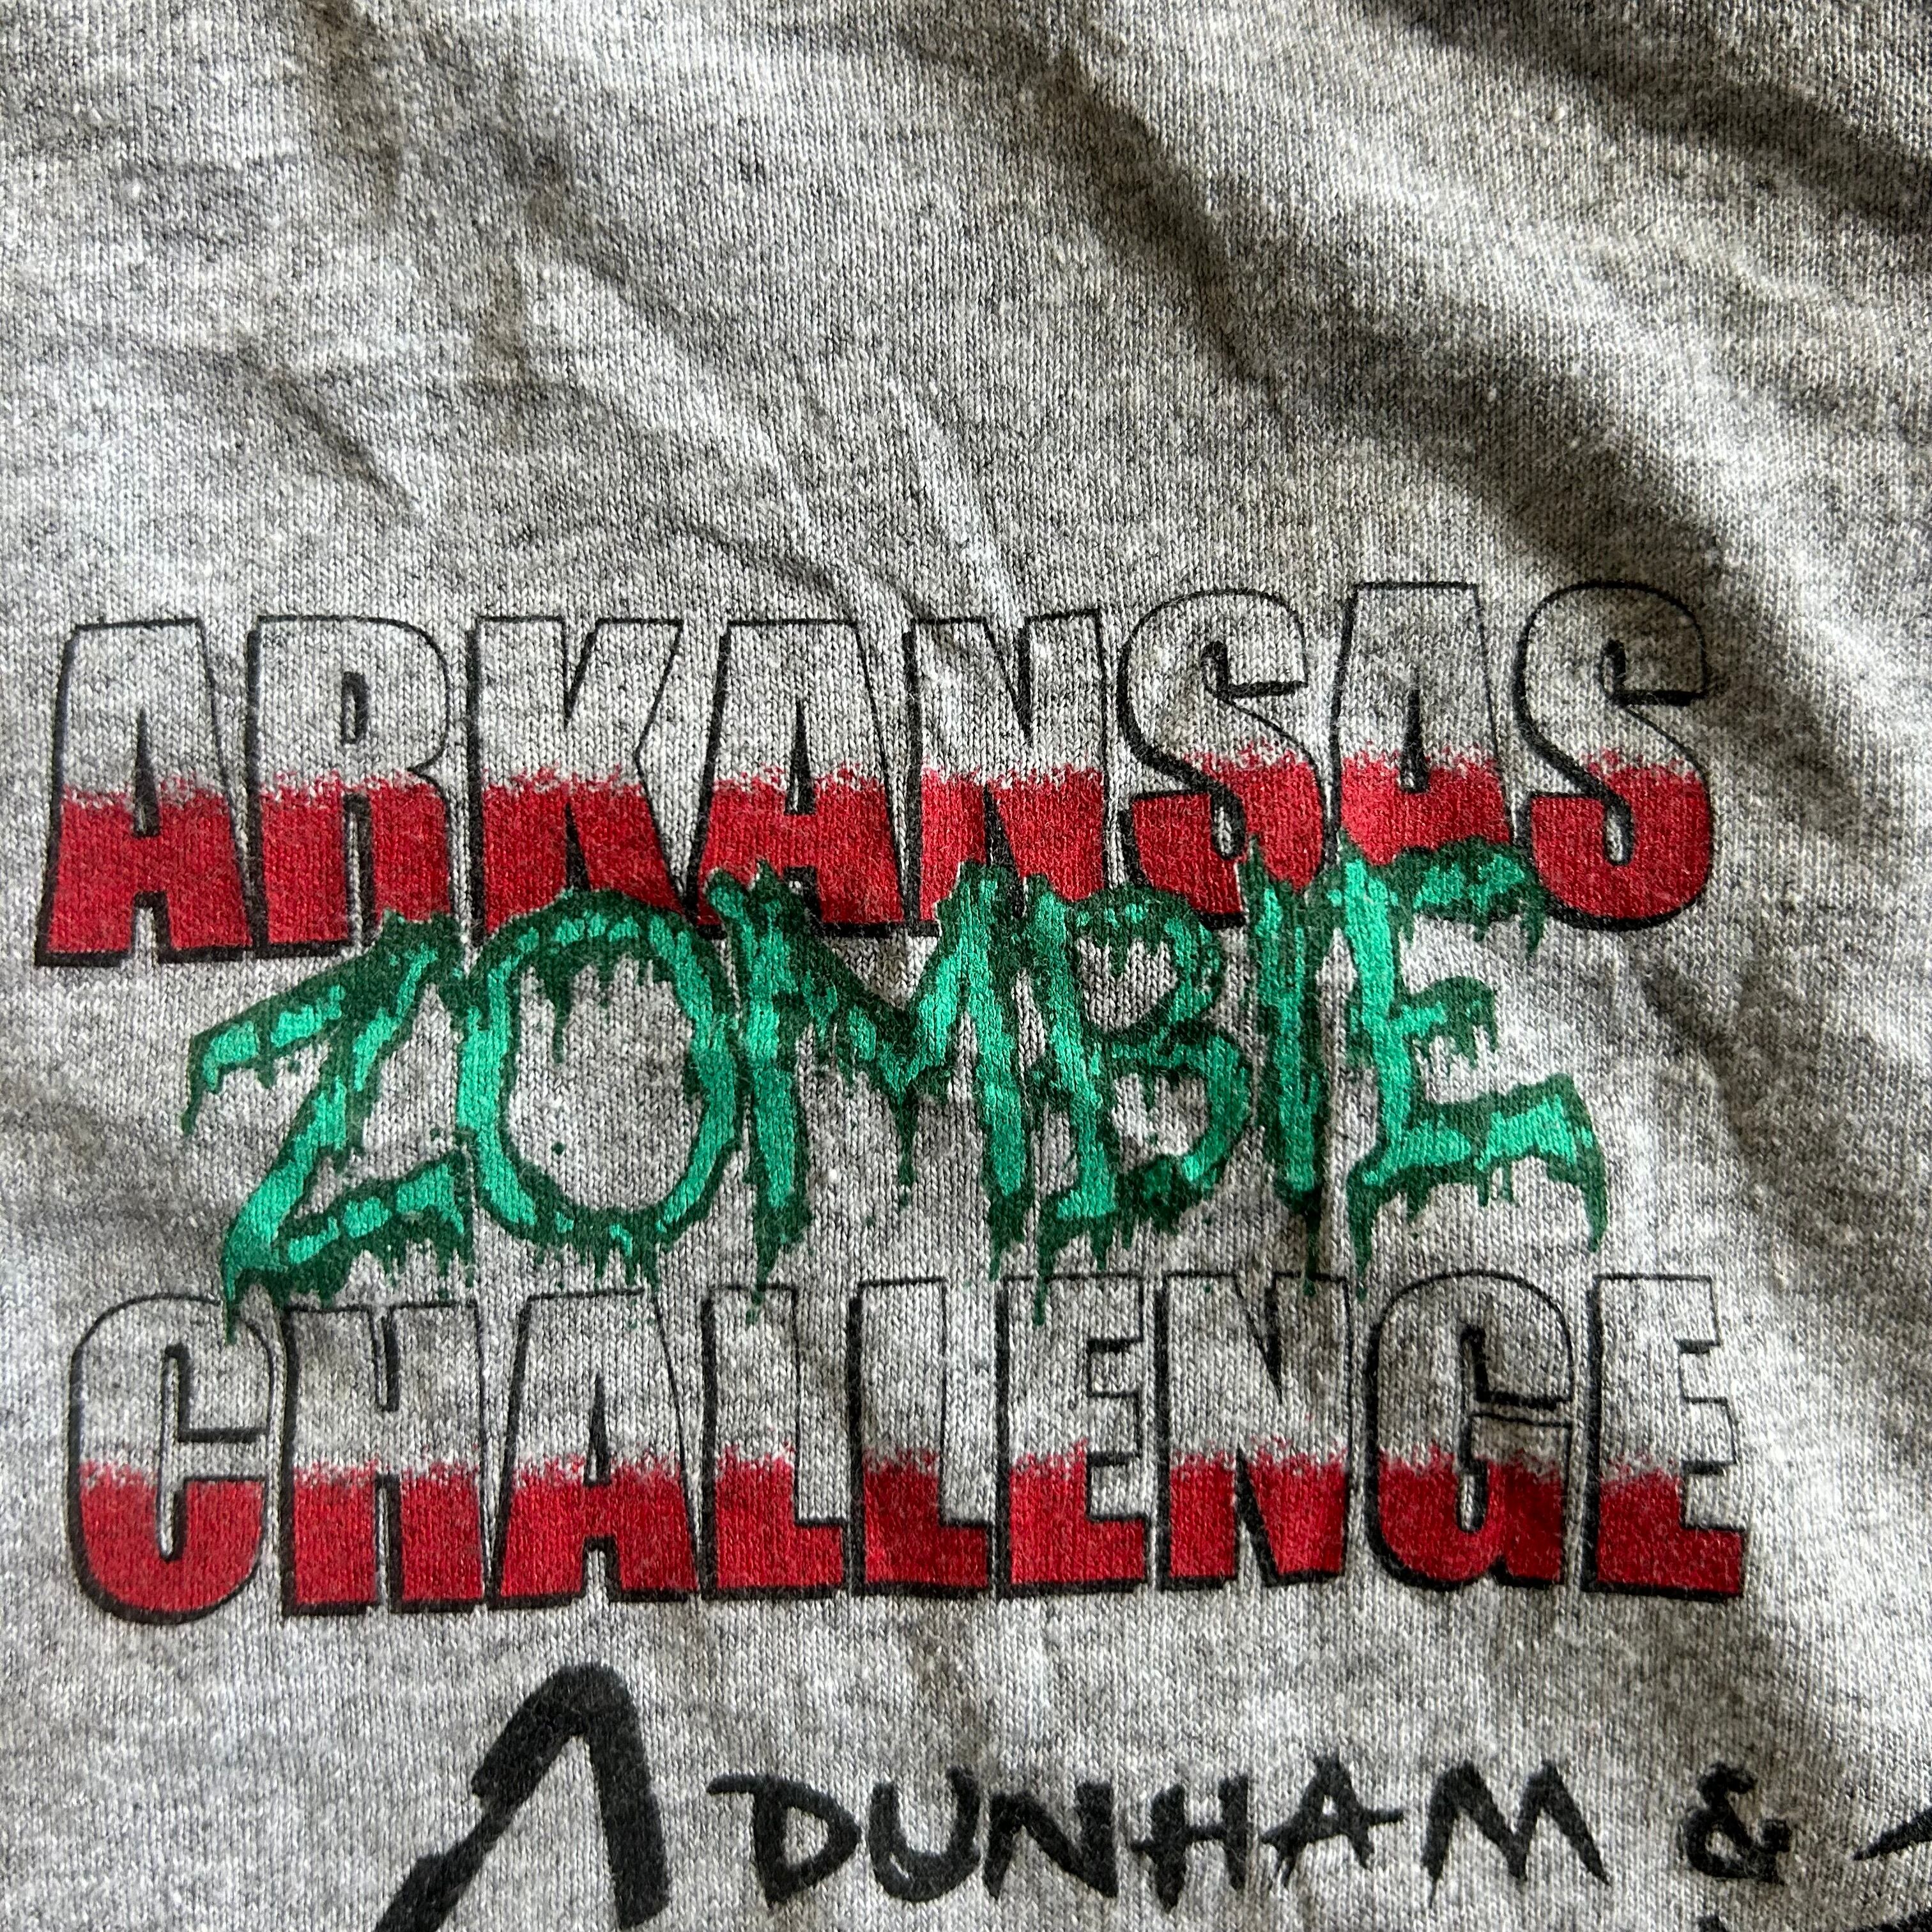 Arkansas zombie challenge tee ゾンビ チャレンジ Tシャツ ホラー 企業 #506120